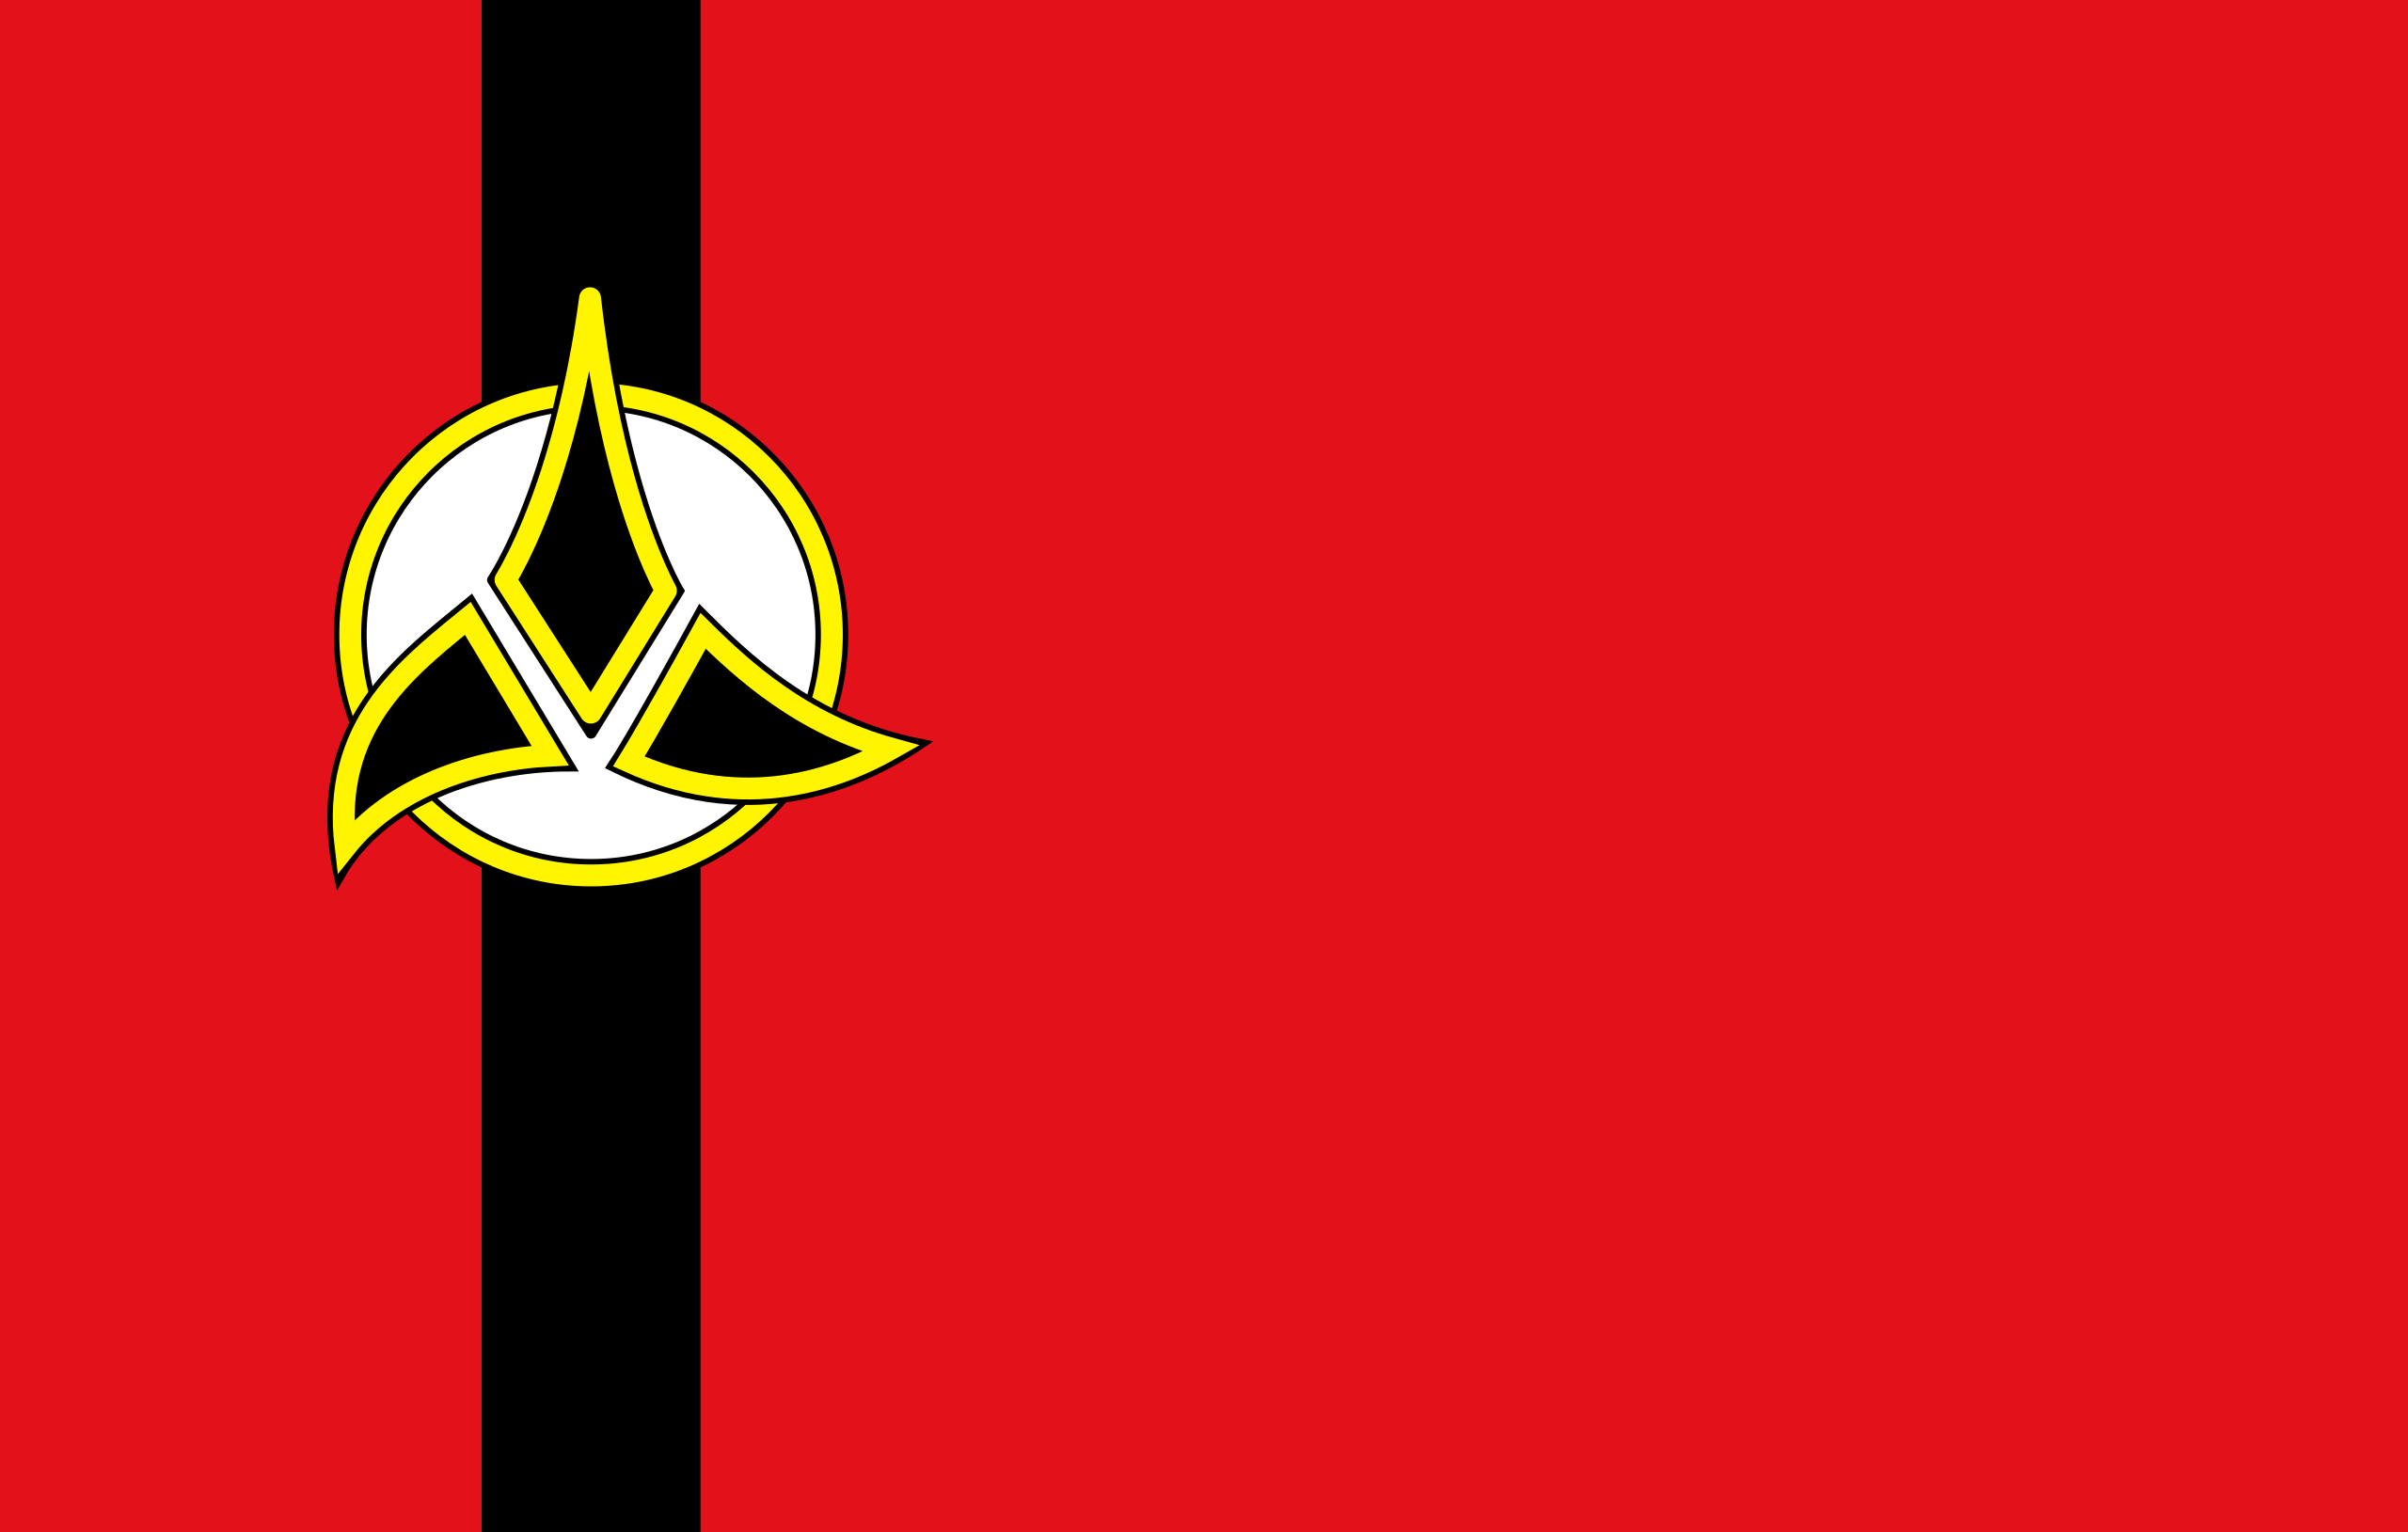 General 2560x1629 flag Klingon Star Trek fictional logo simple background red background minimalism